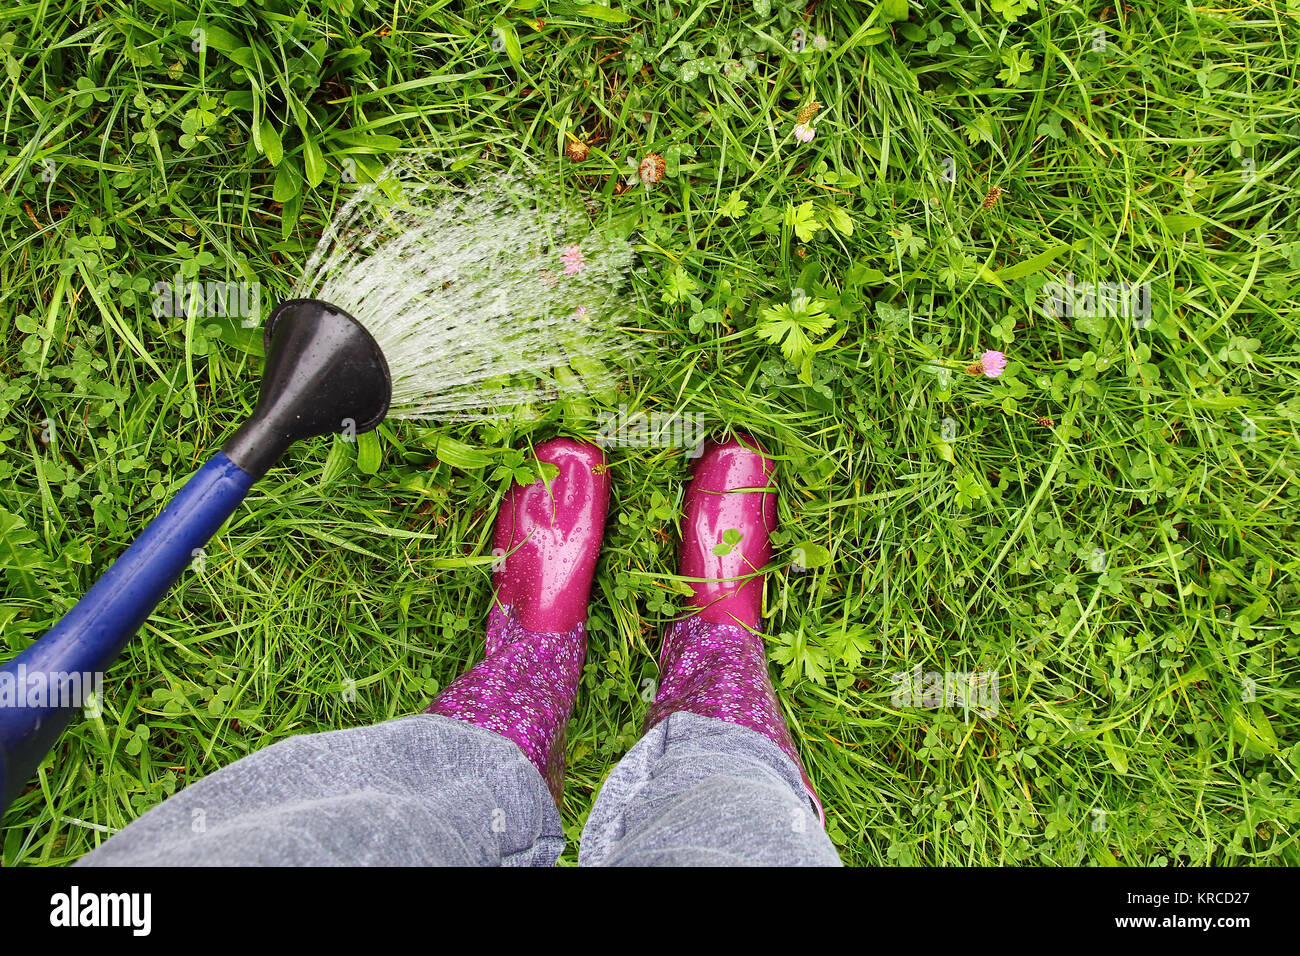 a woman wearing rubber boots pours a gieskanne the lawn Stock Photo